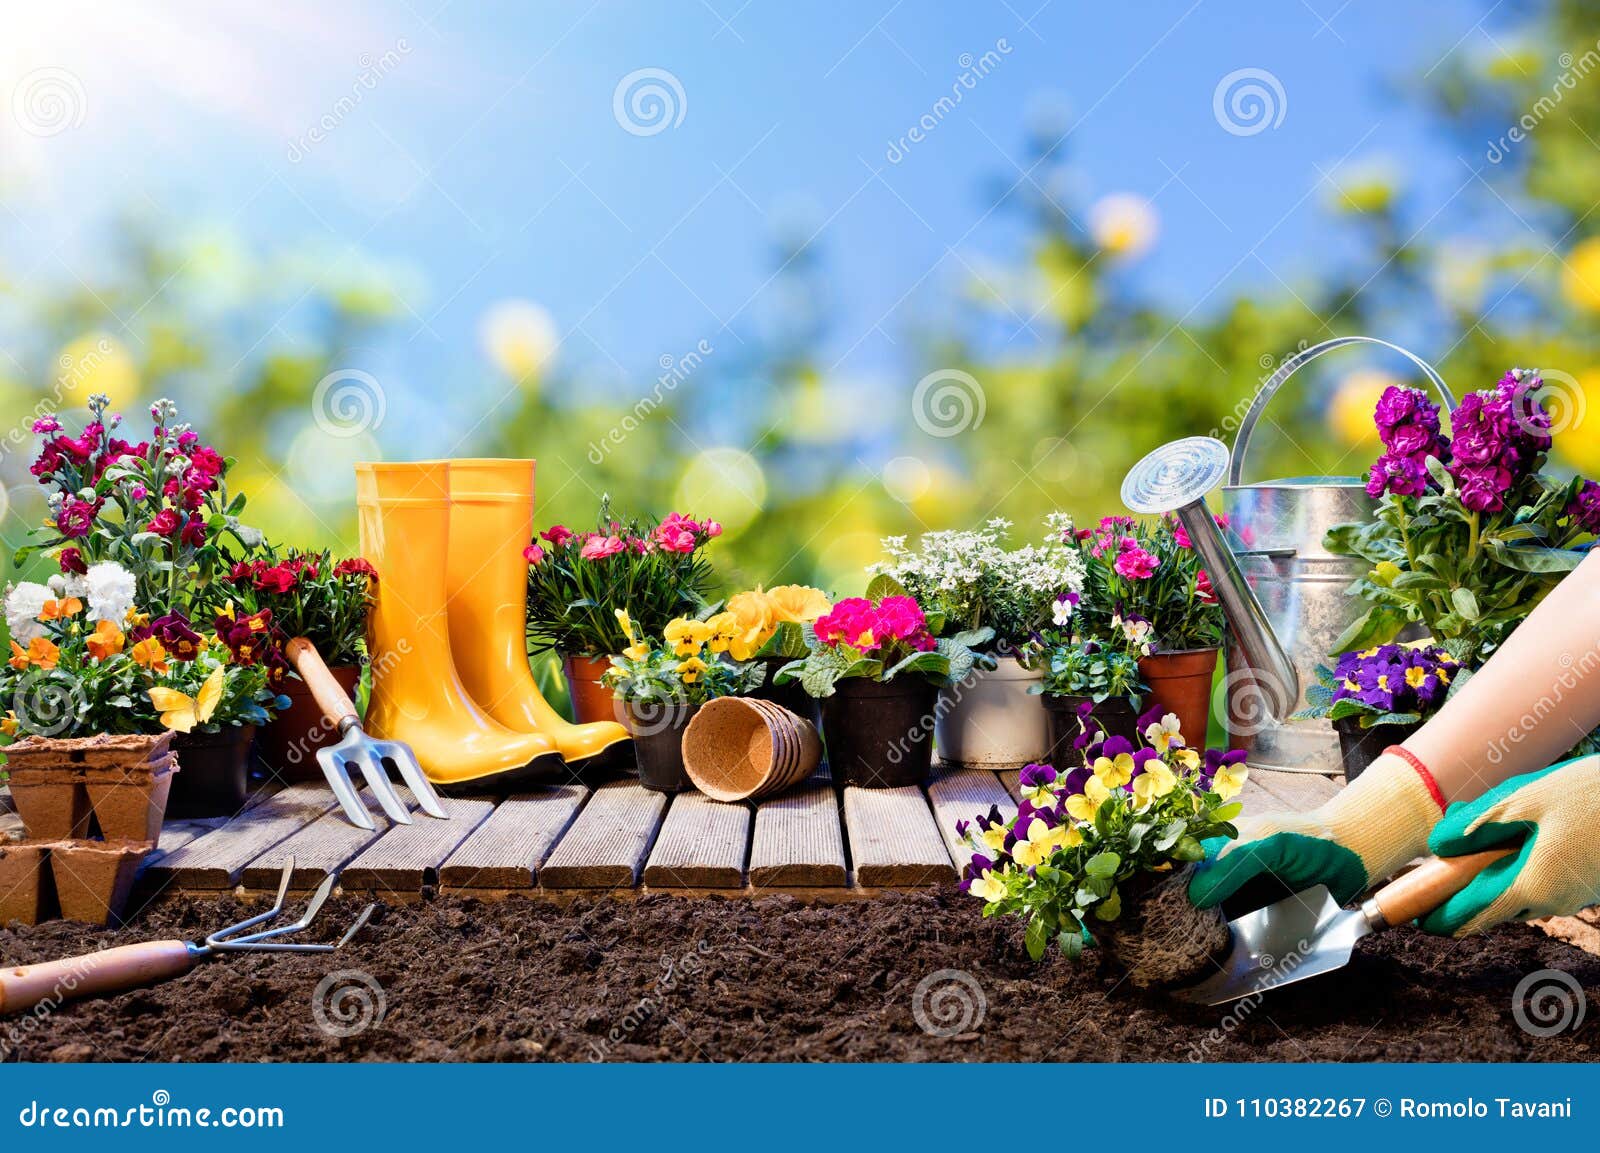 gardening - gardener planting pansy